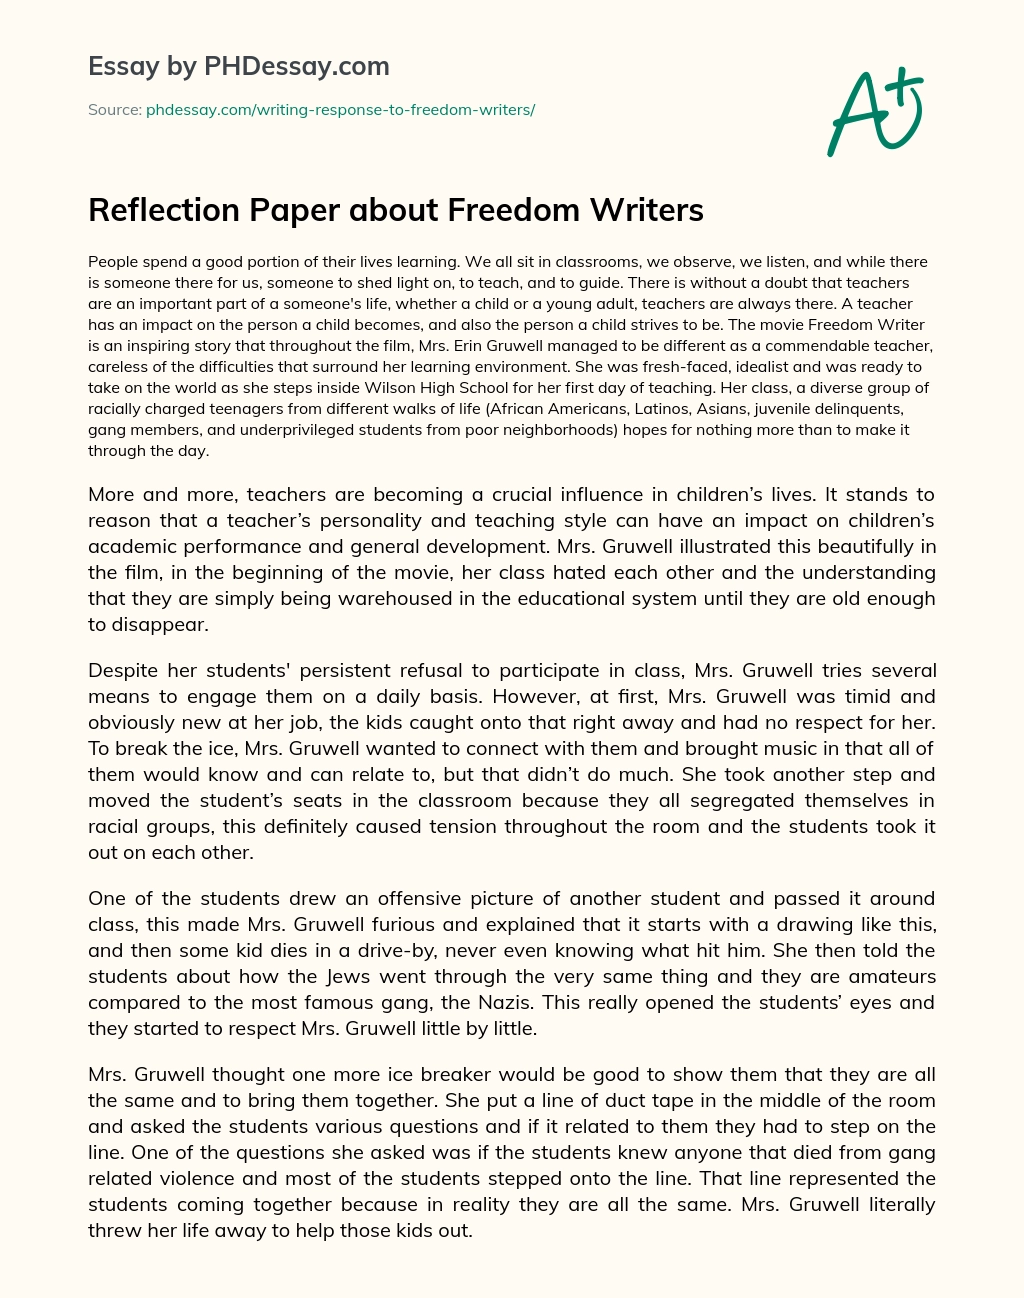 freedom writers reflection essay